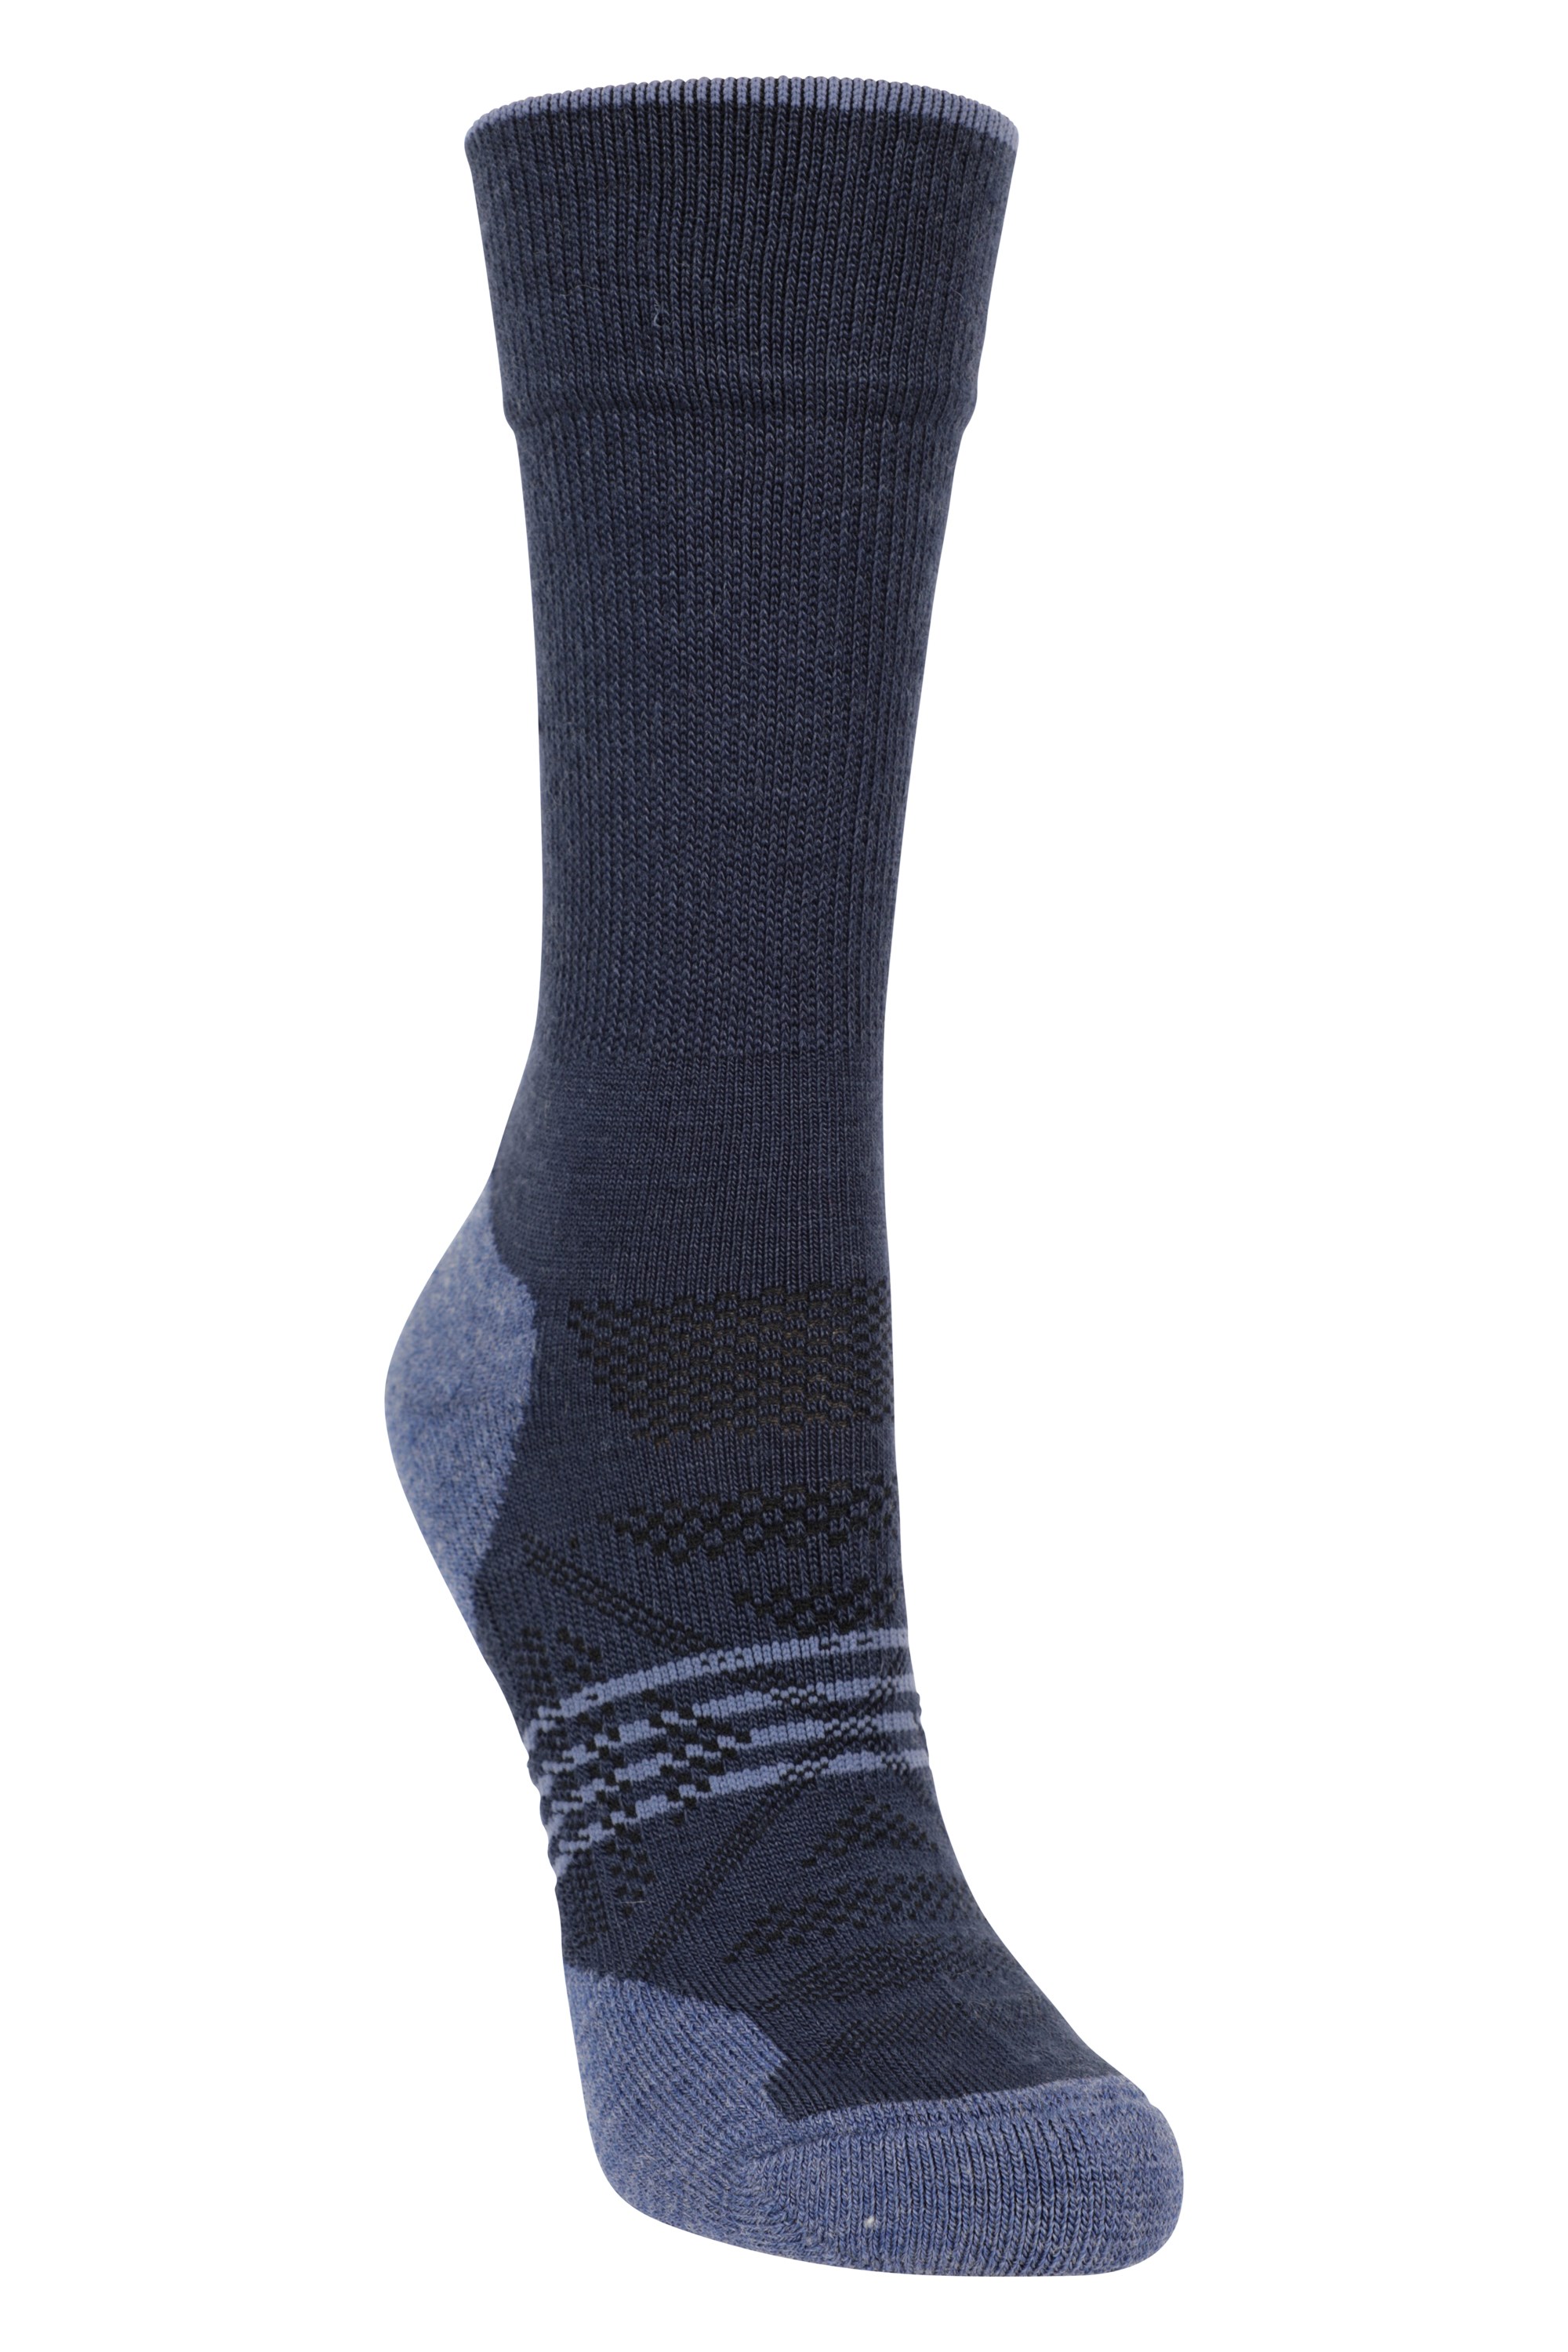 Womens Lightweight Merino Mid-calf Socks - Navy